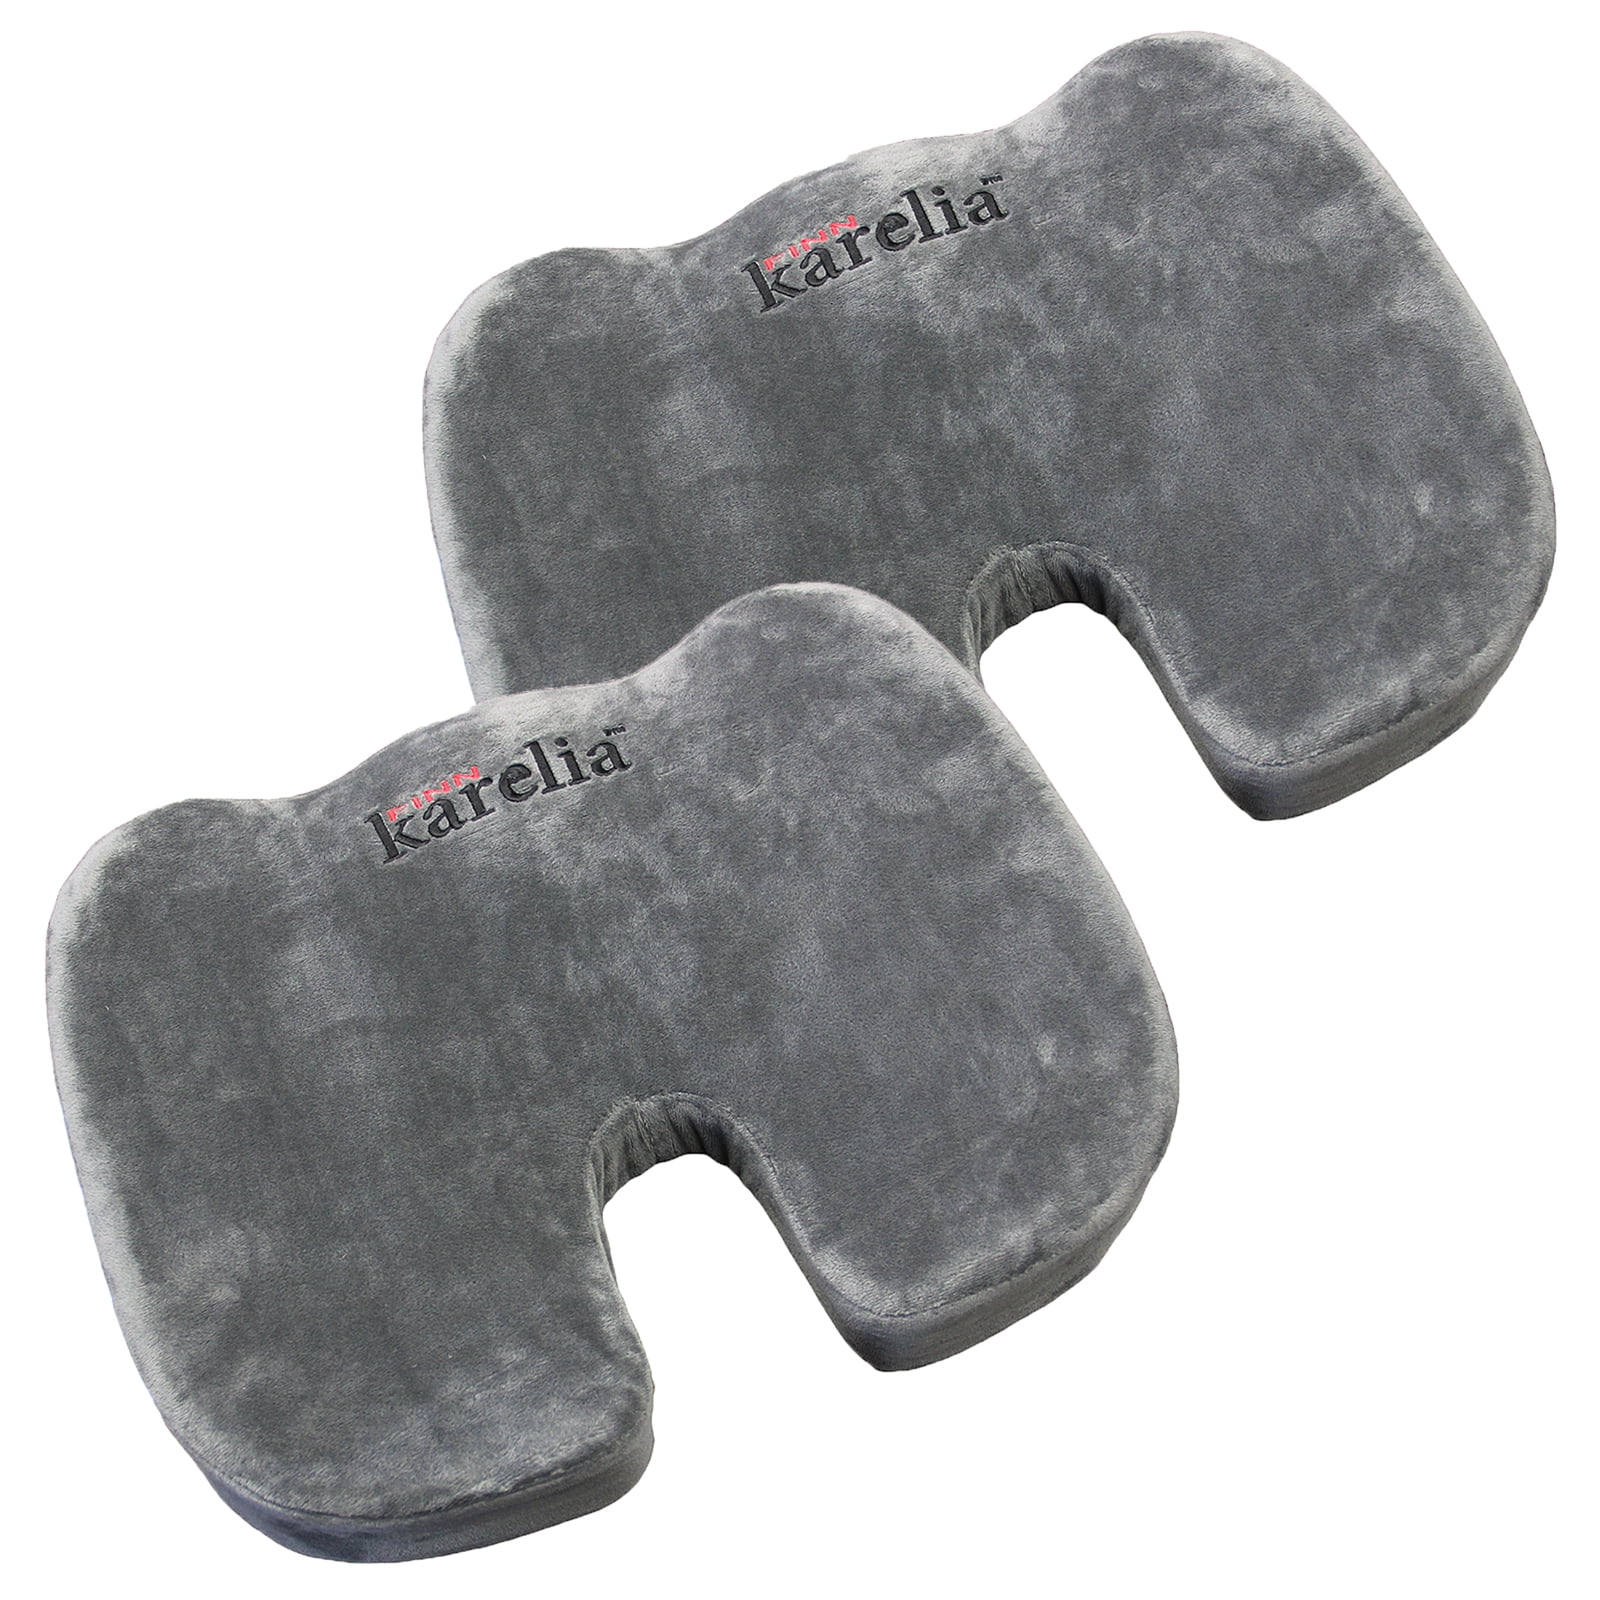 Memory Foam Lumbar Support Cushion - Black at Menards®